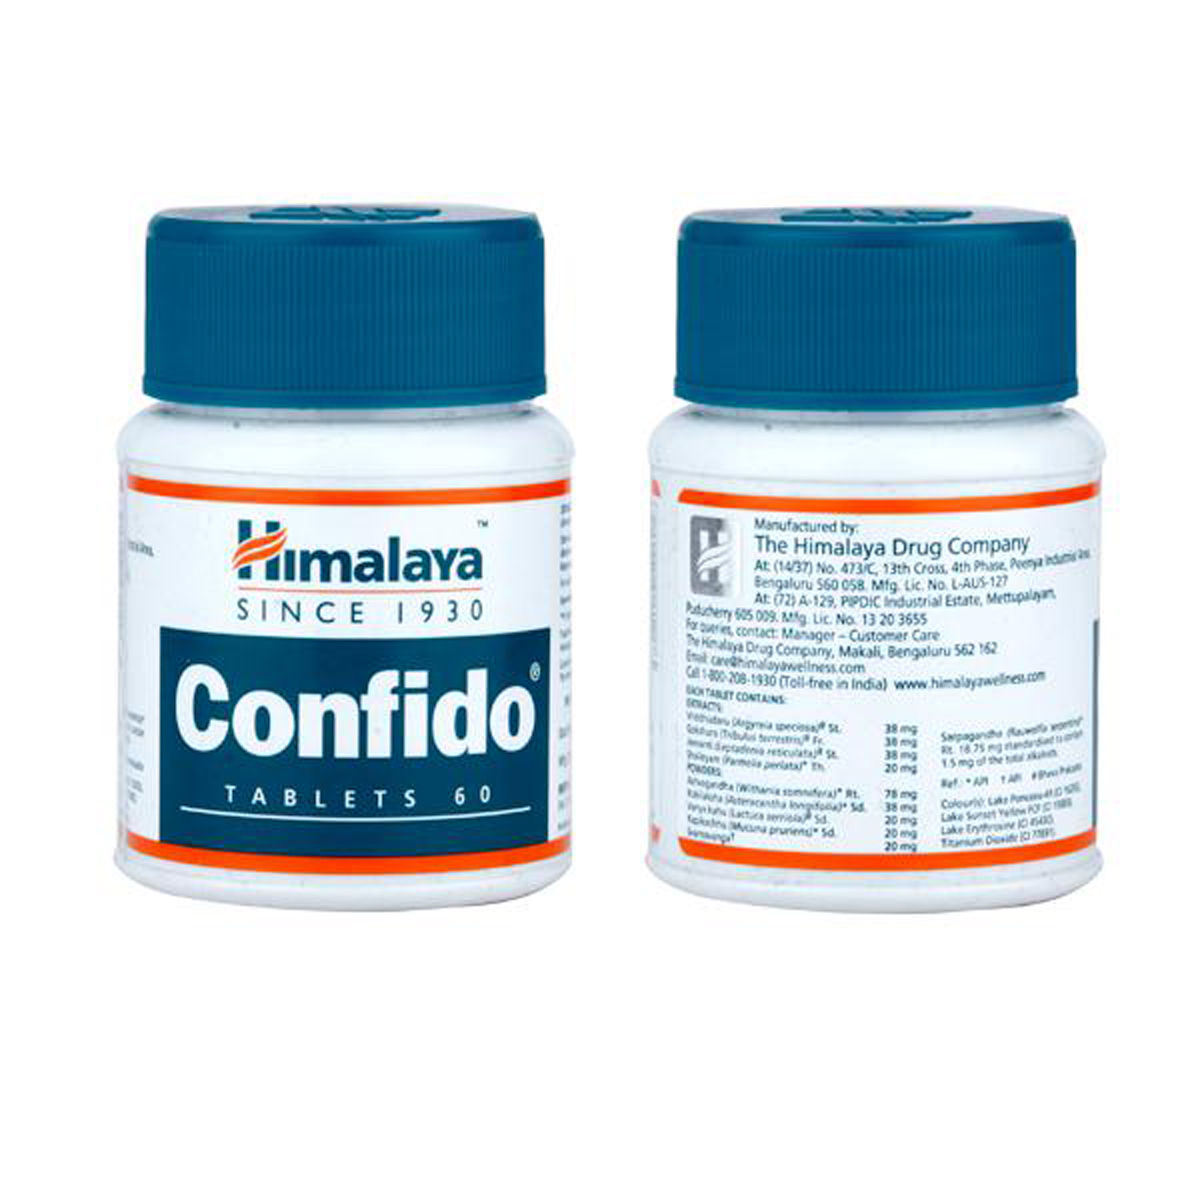 Himalaya Confido, 60 Tablets, Pack of 1 